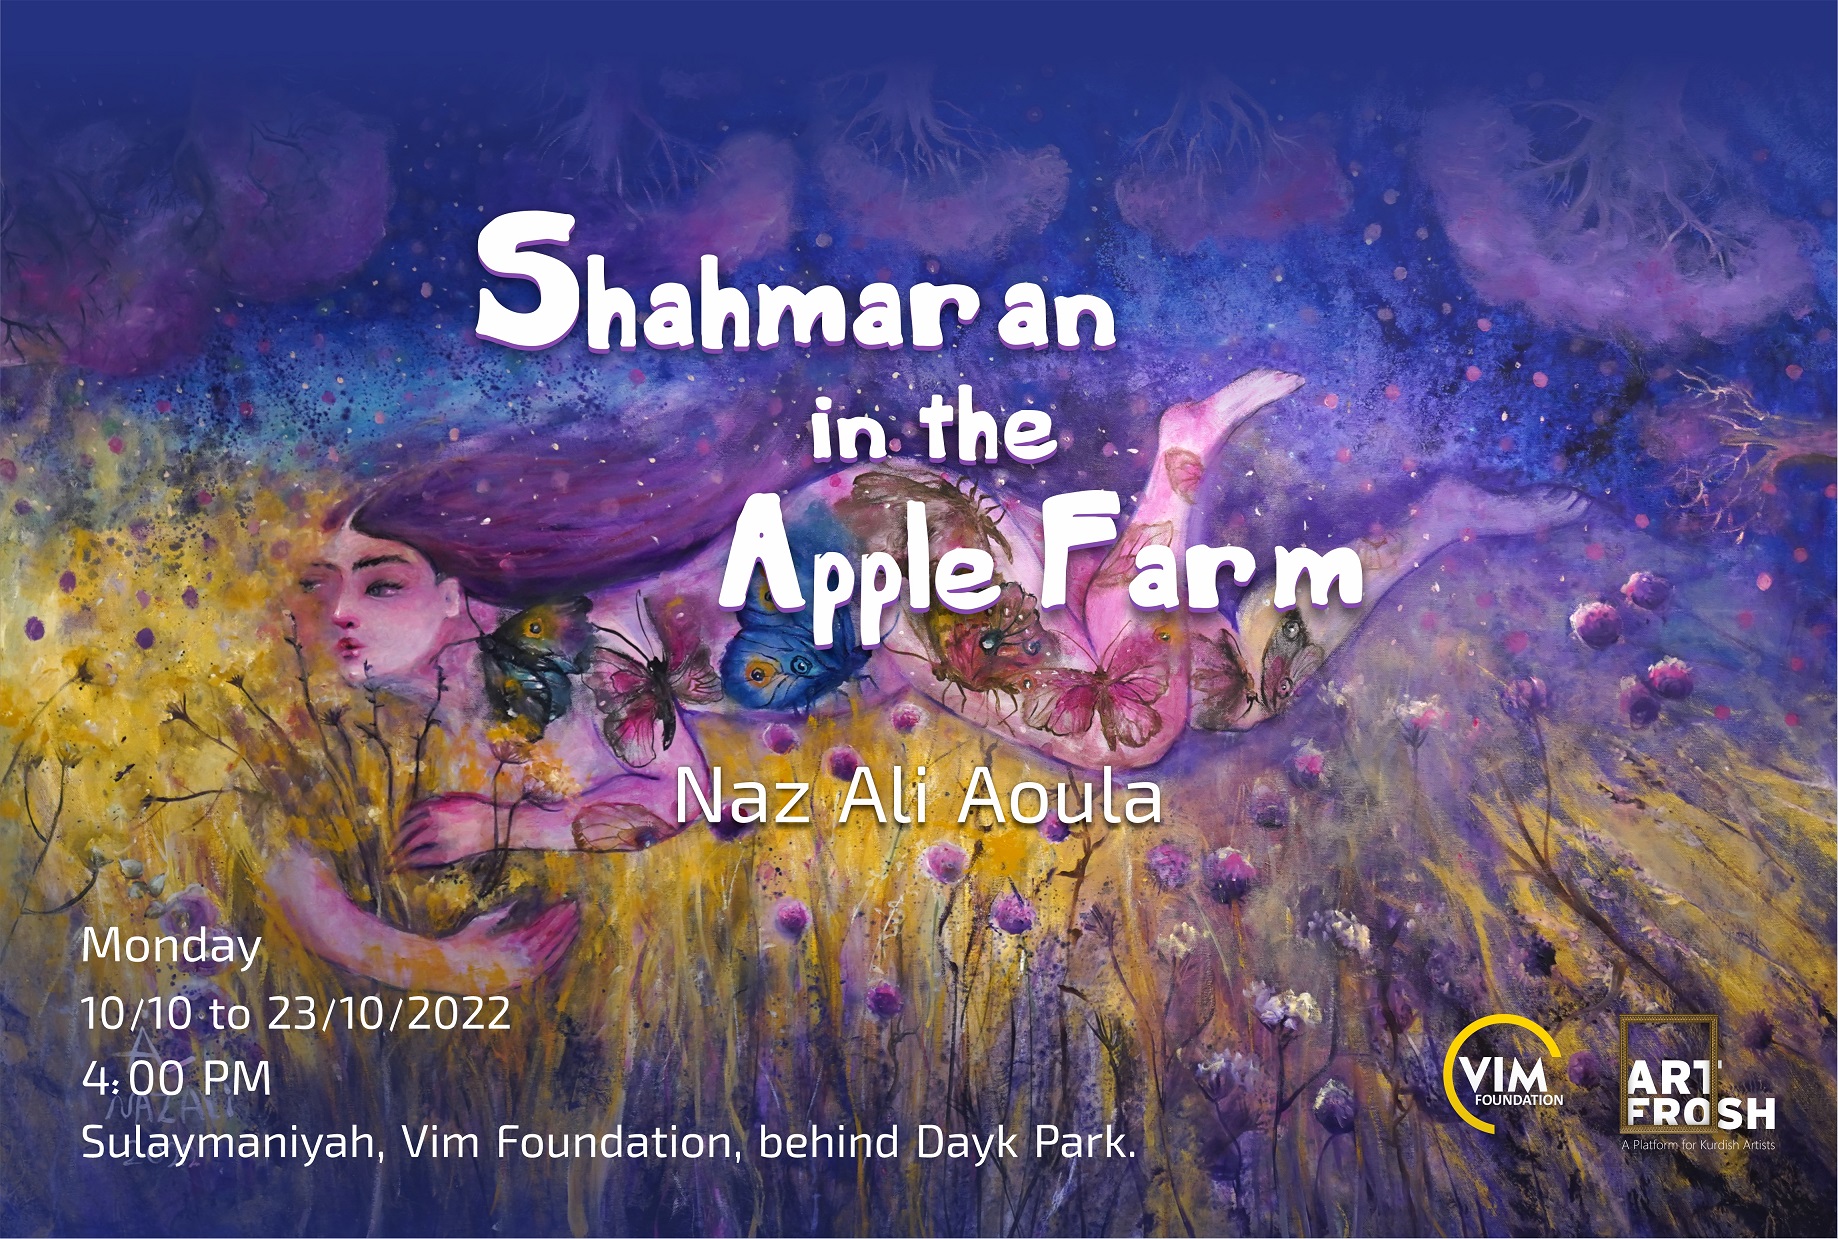 The Artfrosh Project presents the “Shahmaran in the Apple Farm” exhibition.